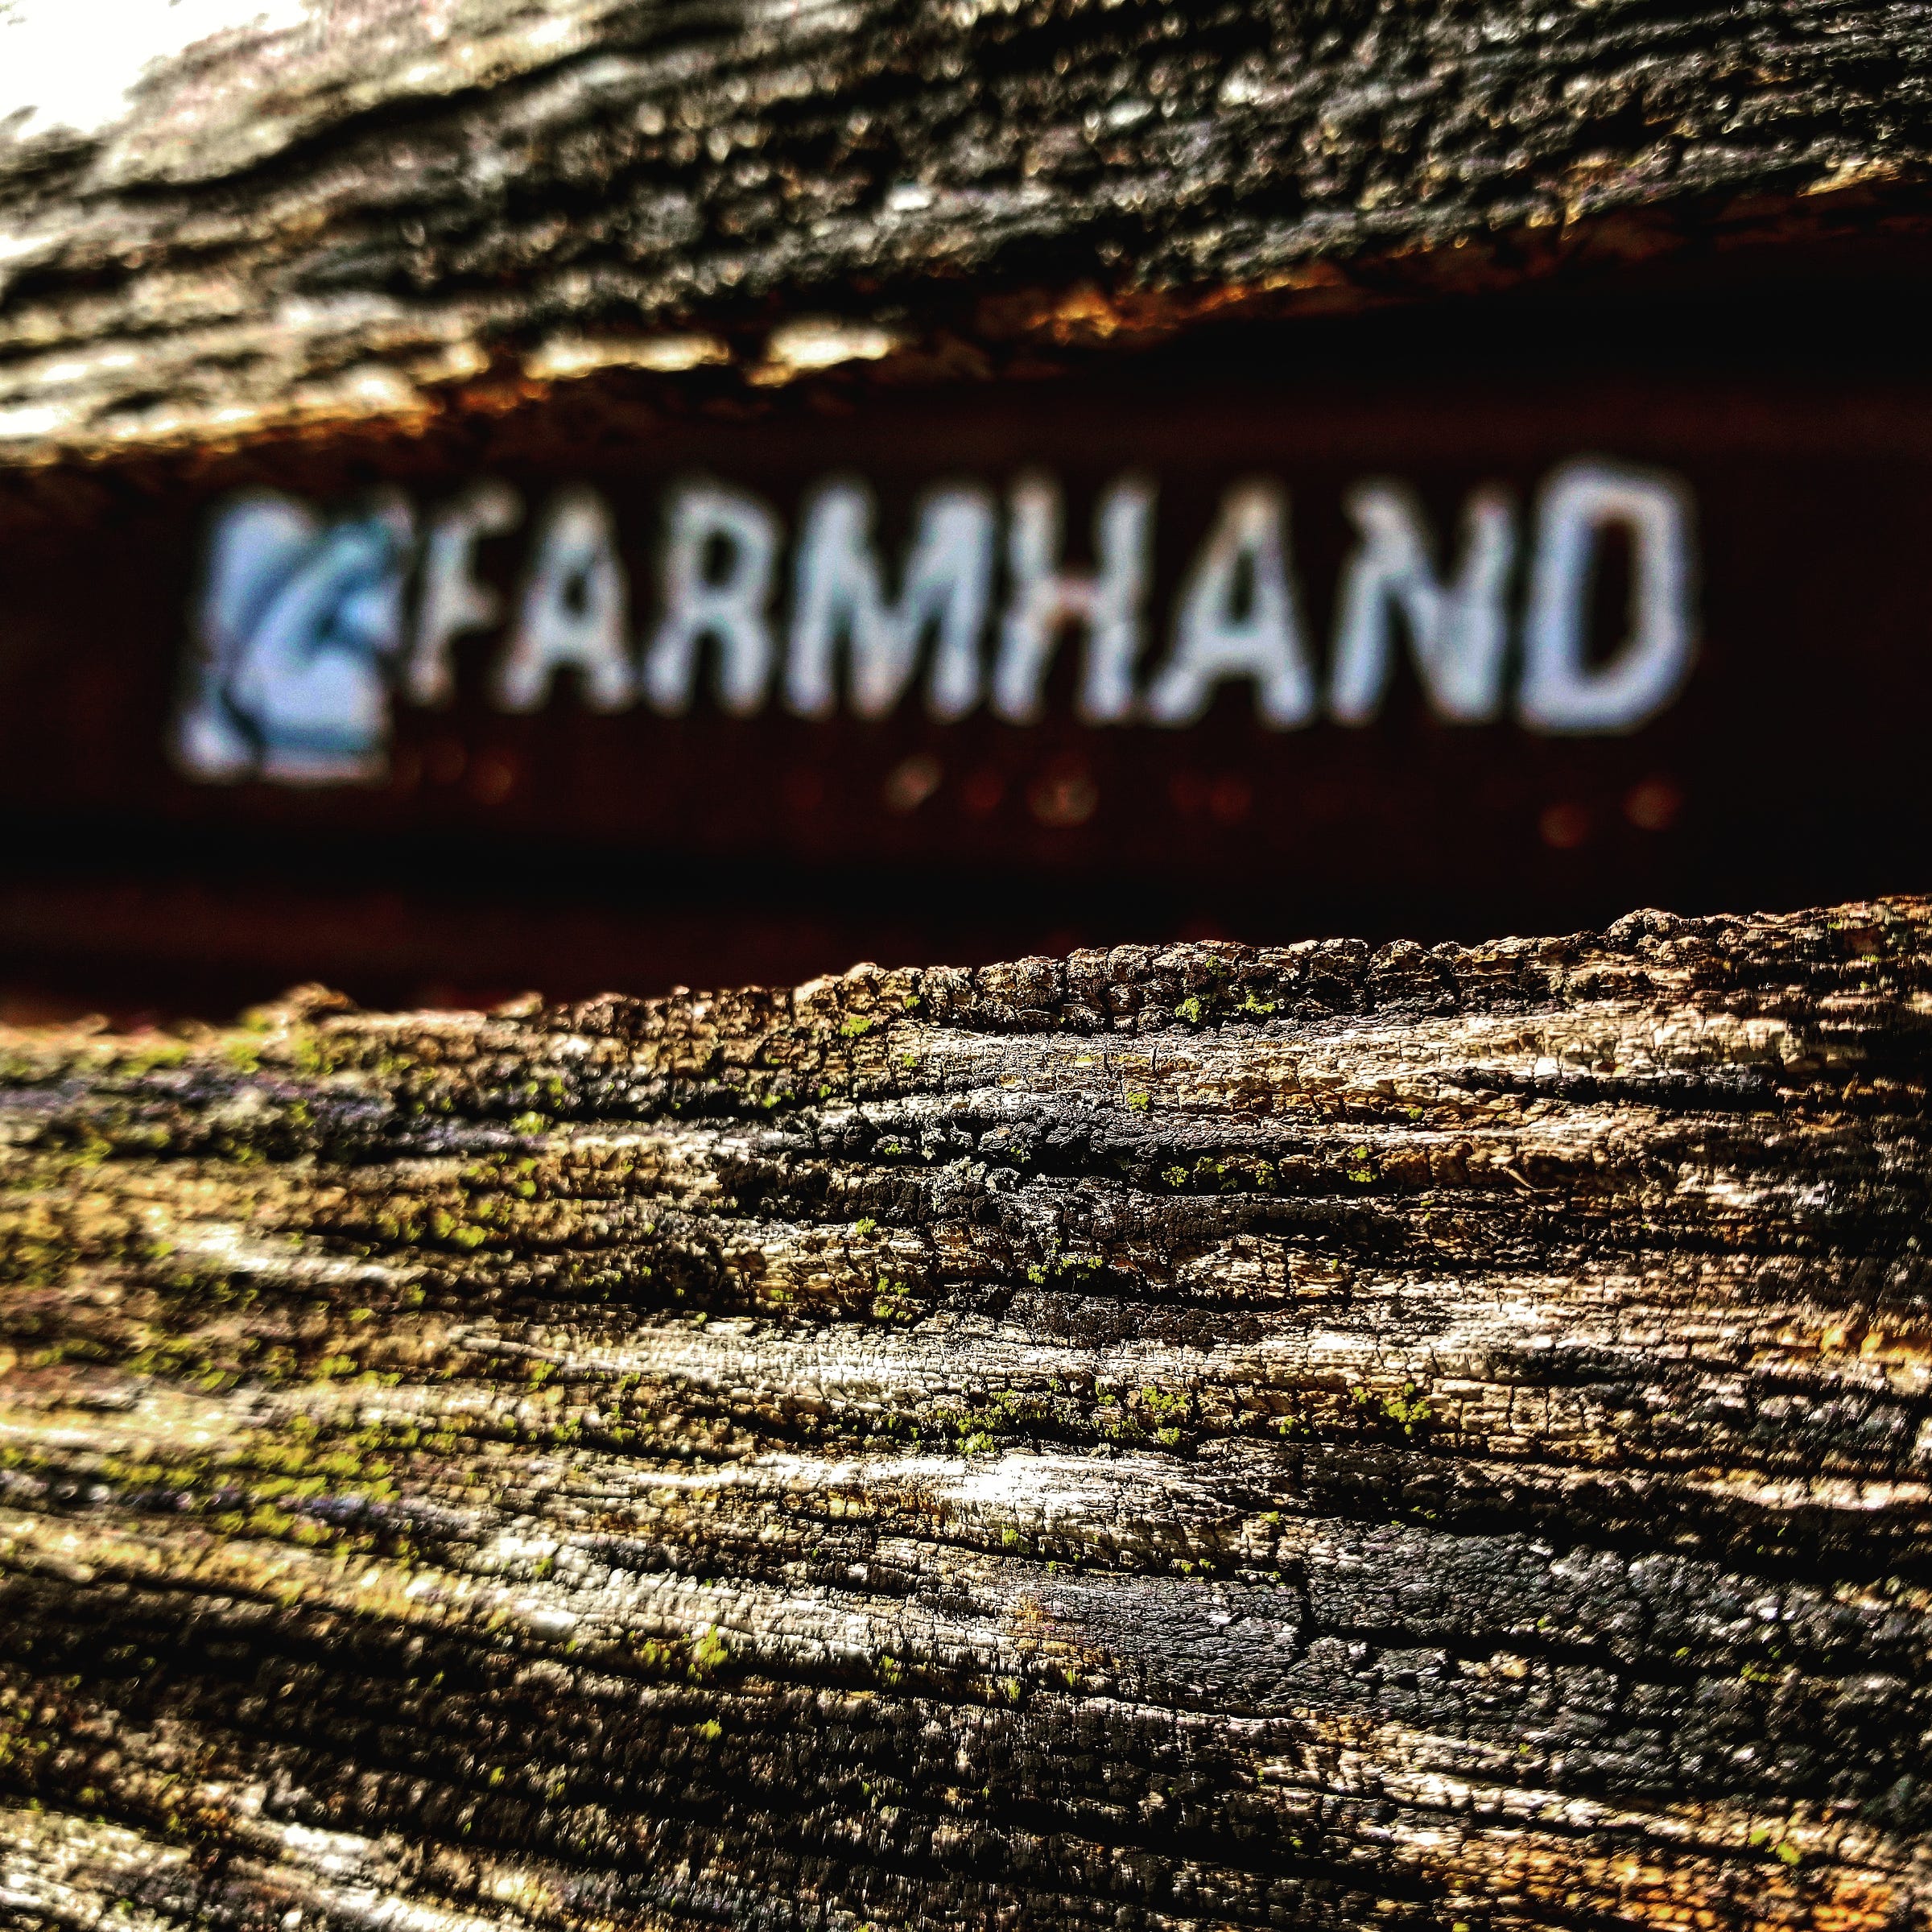 Farmhand - Image by Shawn R. Metivier, 2017